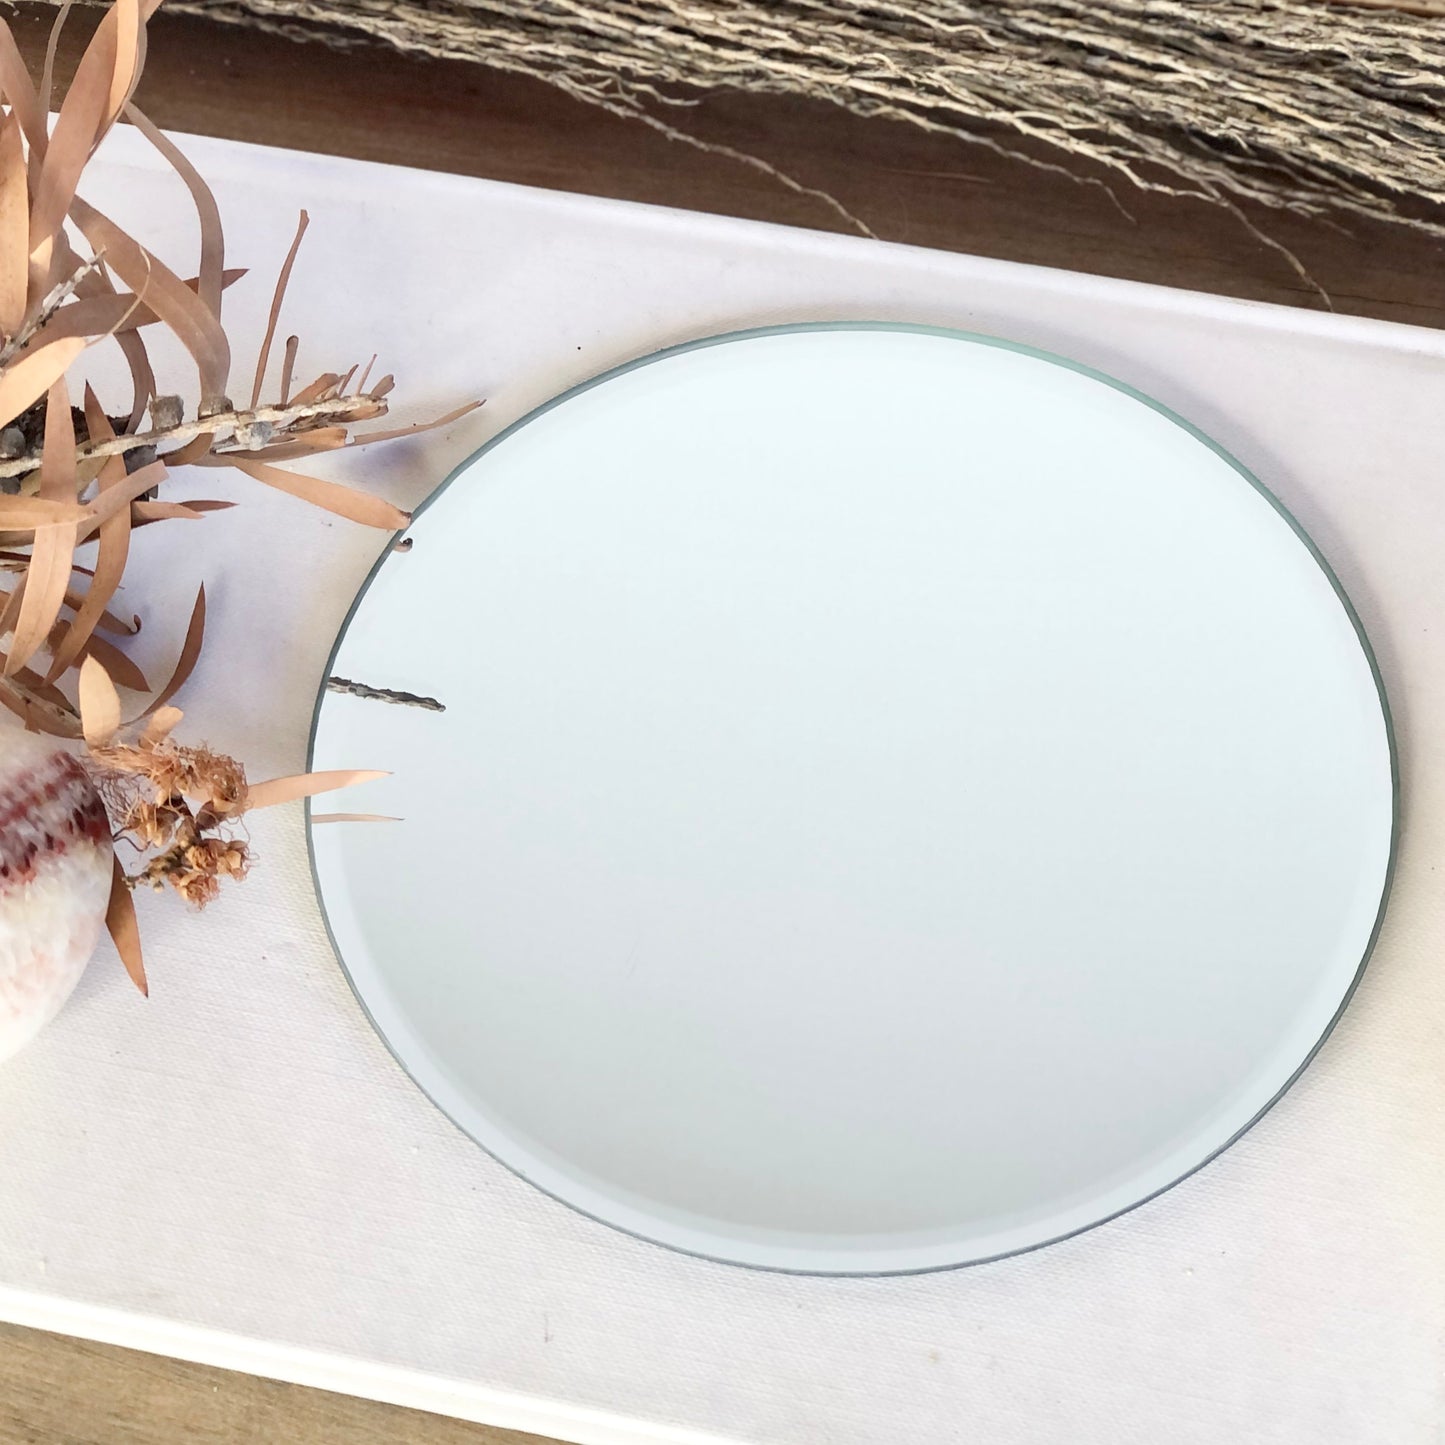 Mirror plate / beveled edge mirror platter tray